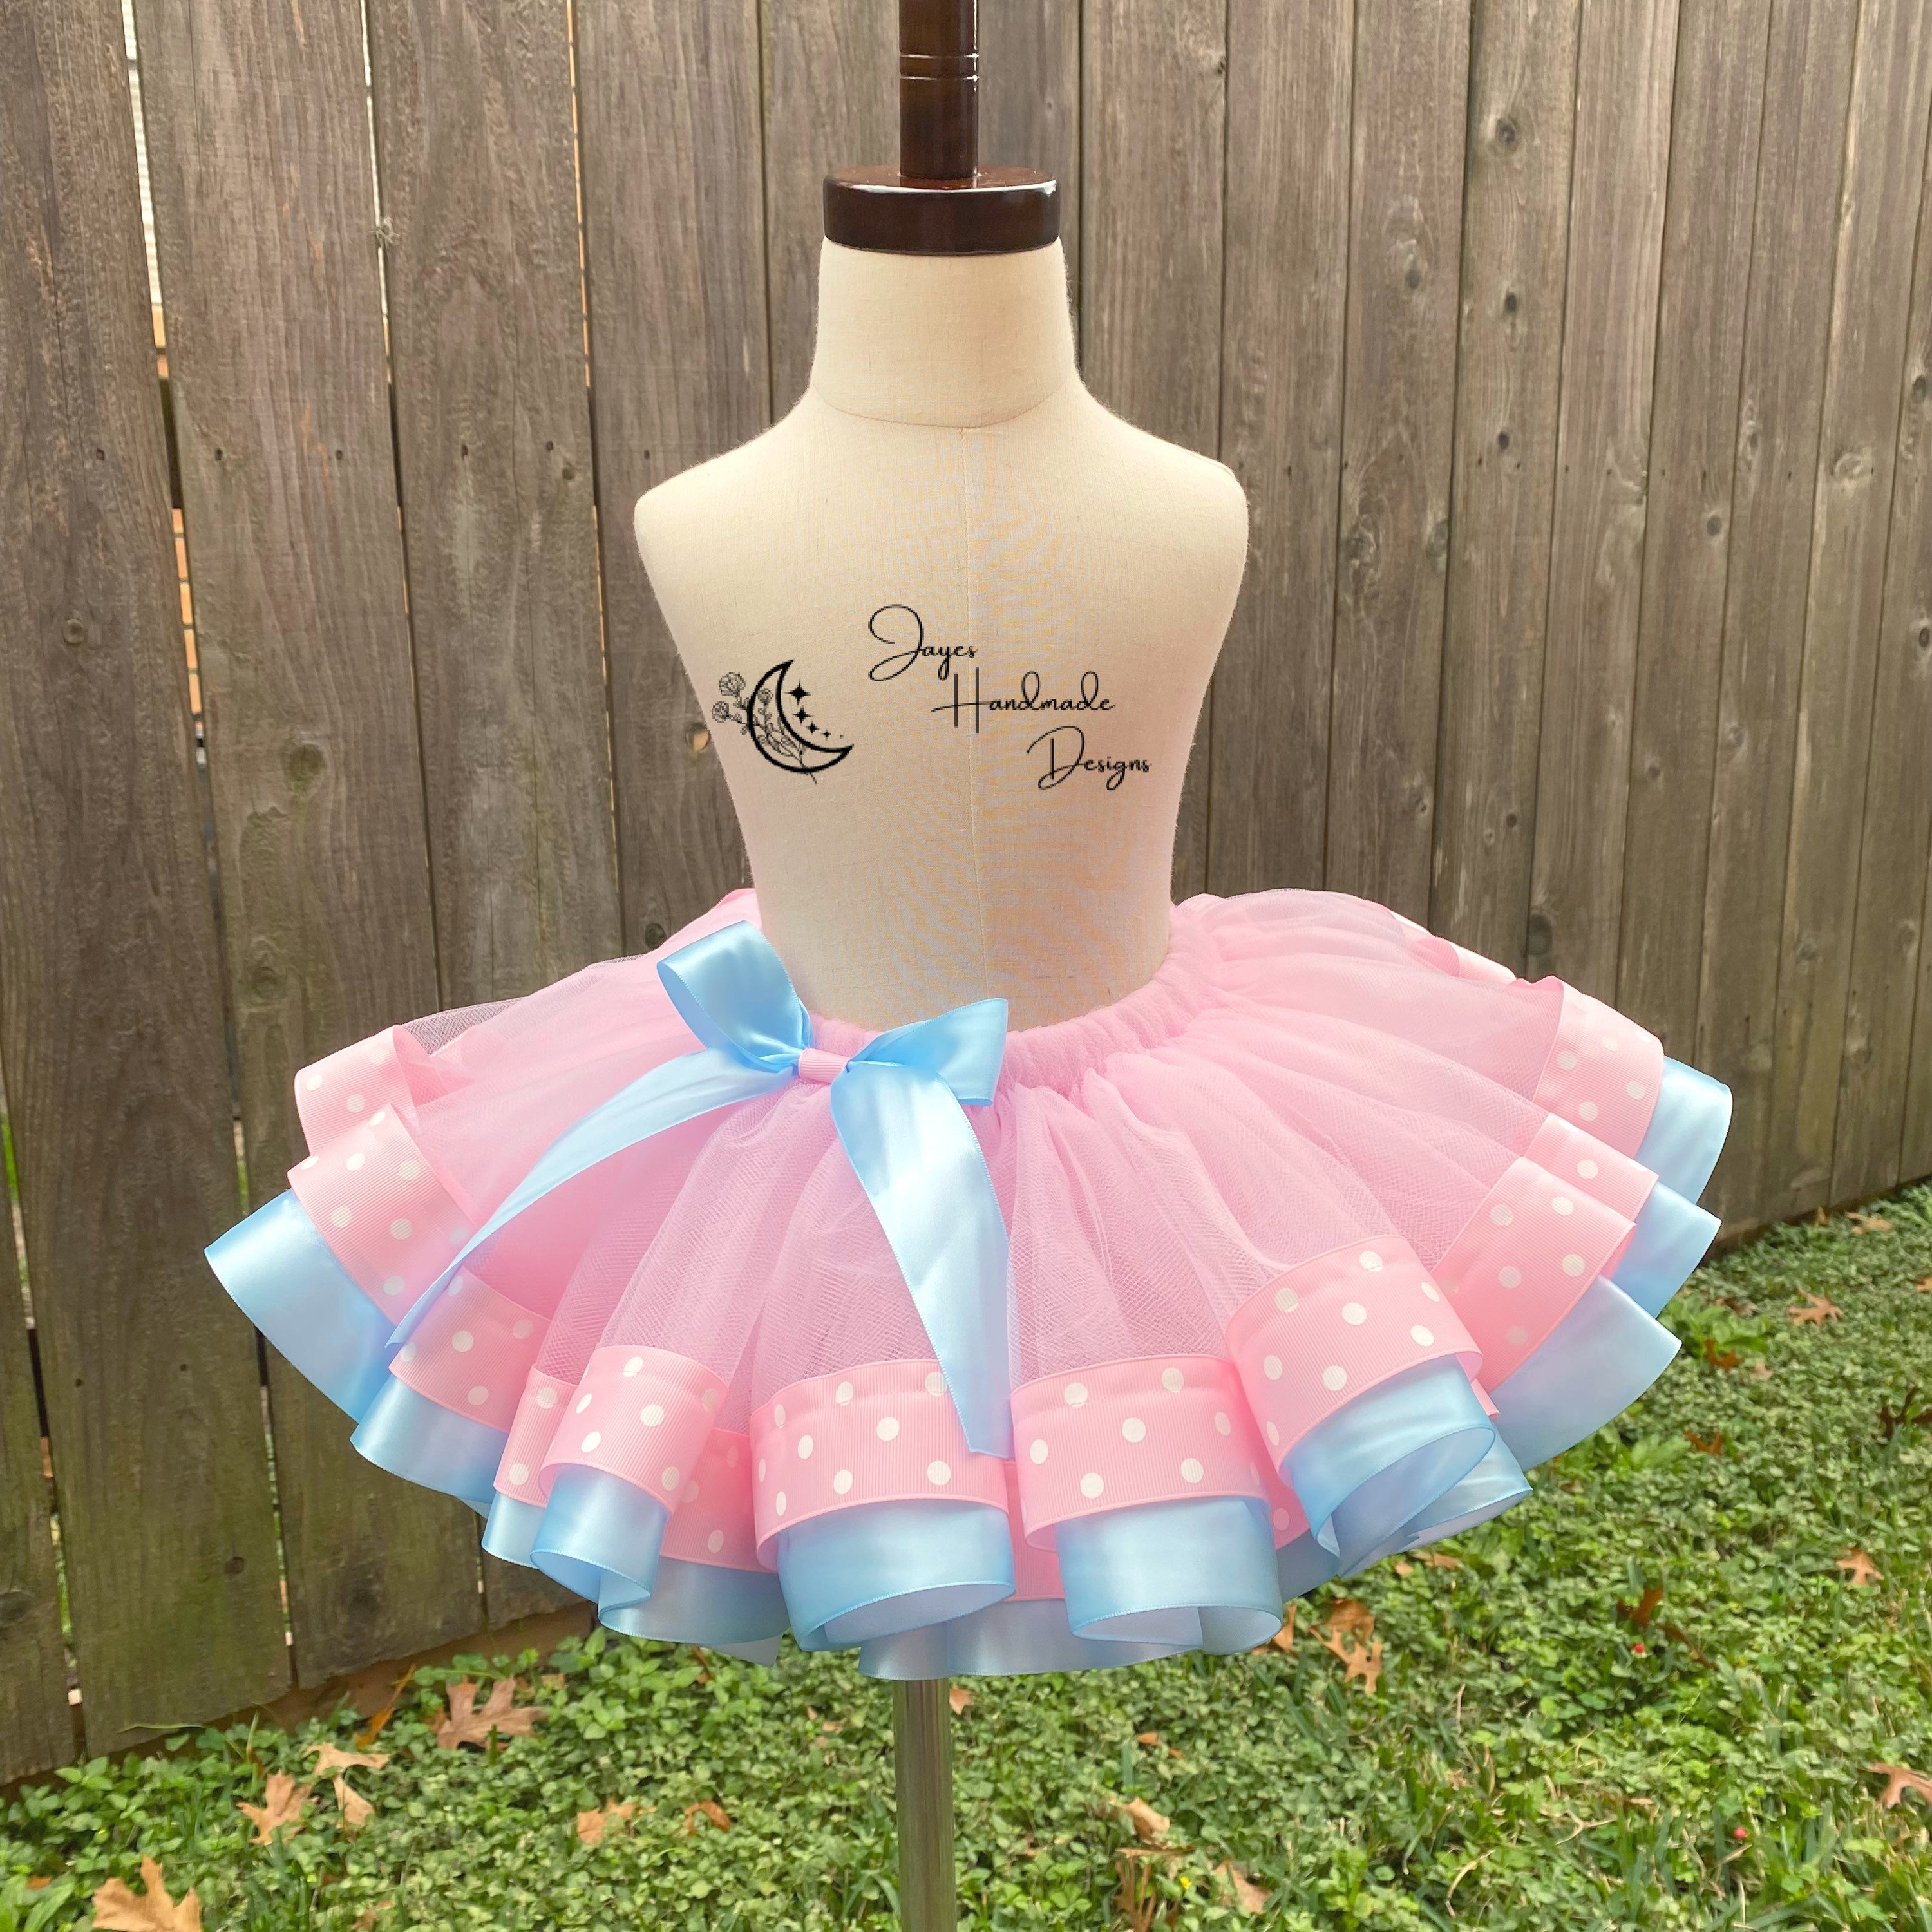 2020 Rosa Azul Romántico Tutú Bailarina Vestido Niños Niña